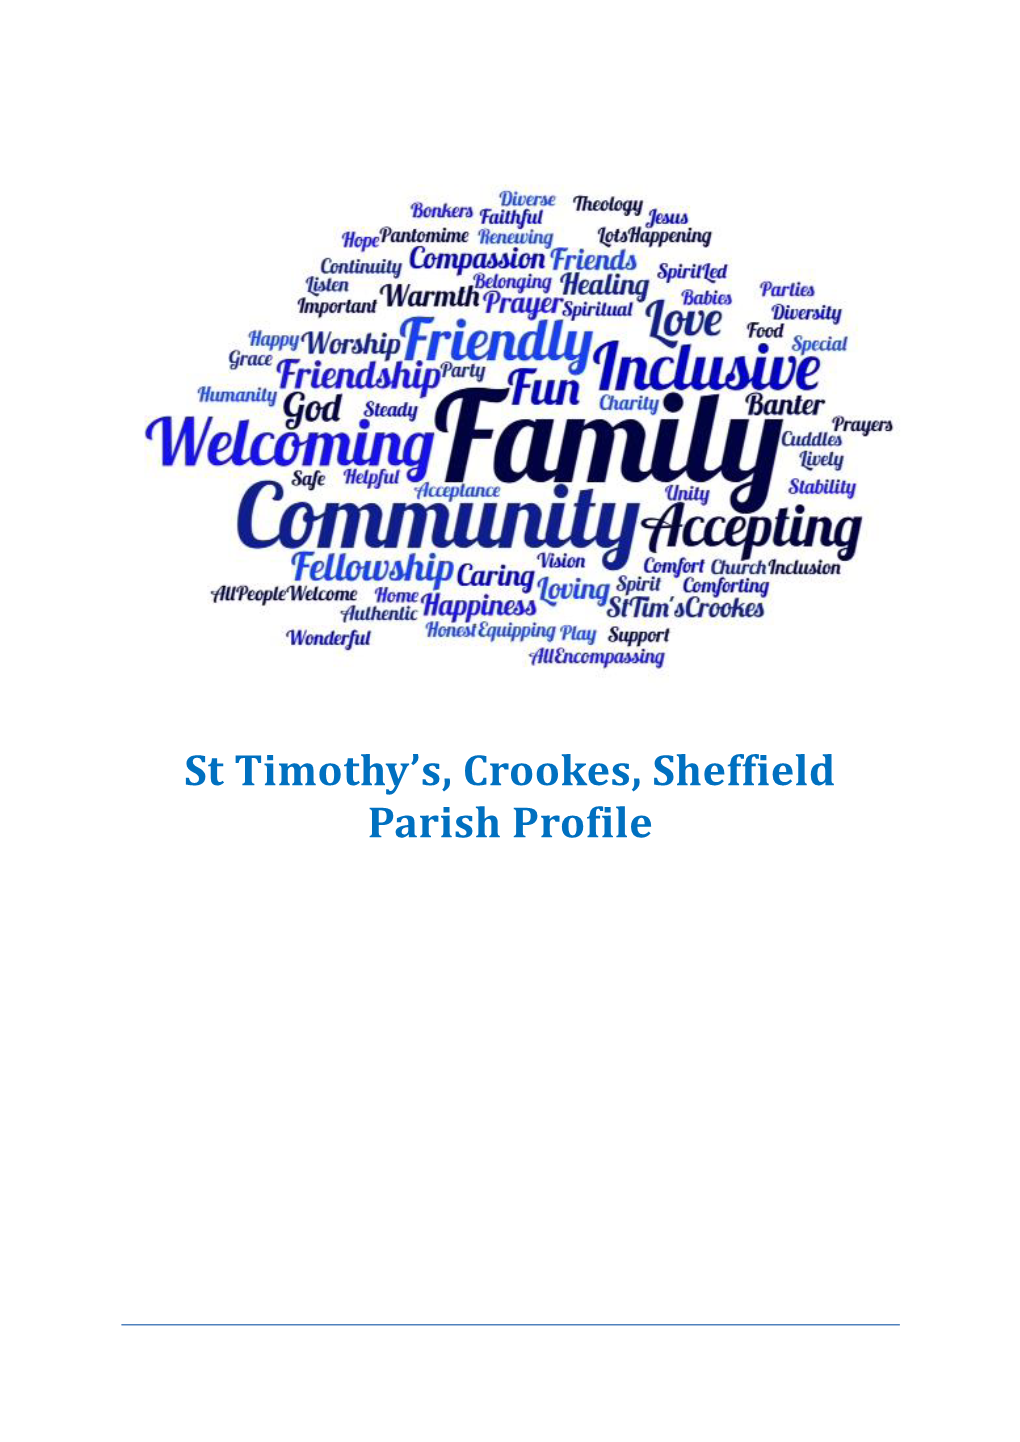 St Timothy's, Crookes, Sheffield Parish Profile